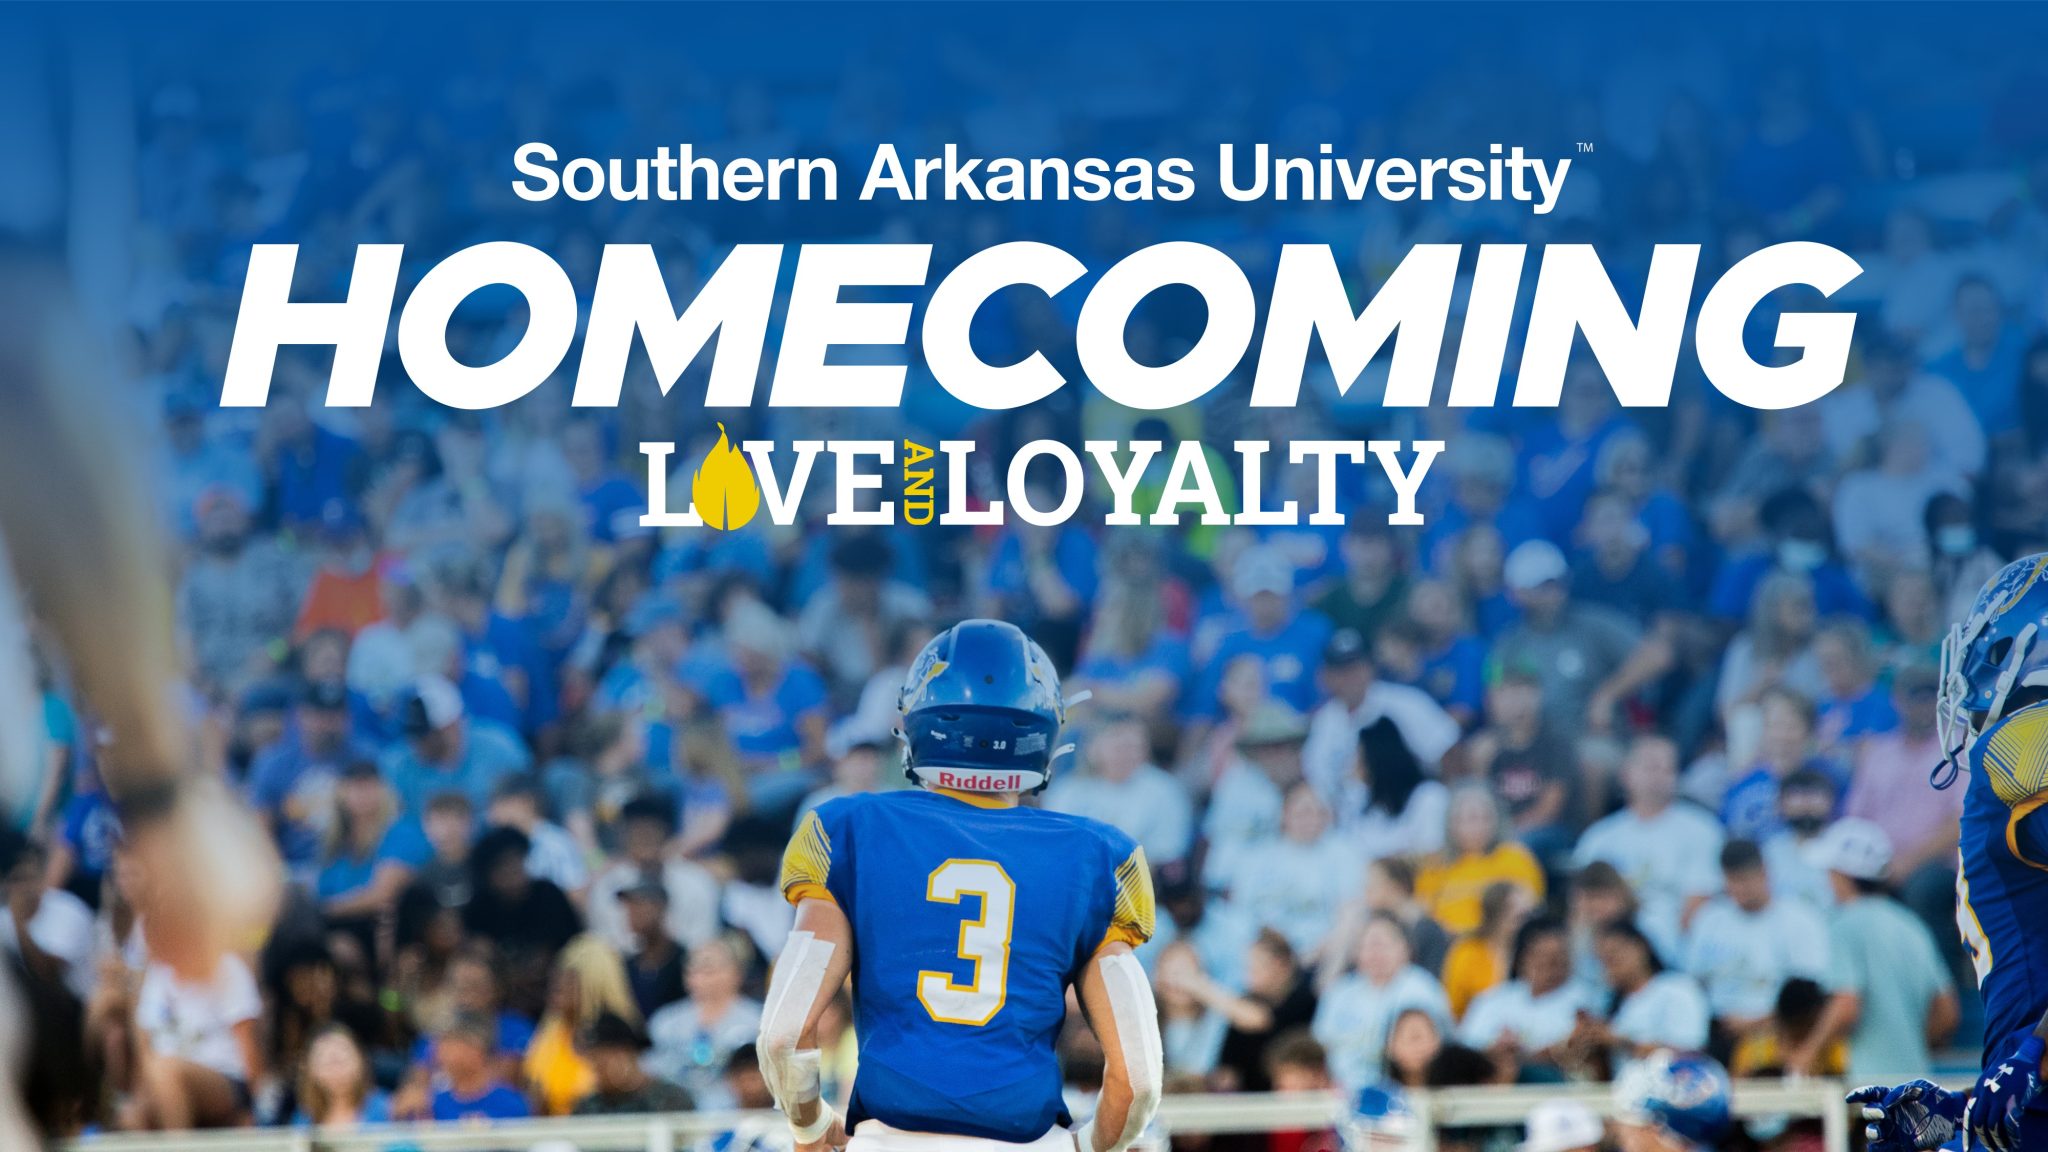 SAU to host "Love and Loyalty" Homecoming Week October 4-9 - News - SAU